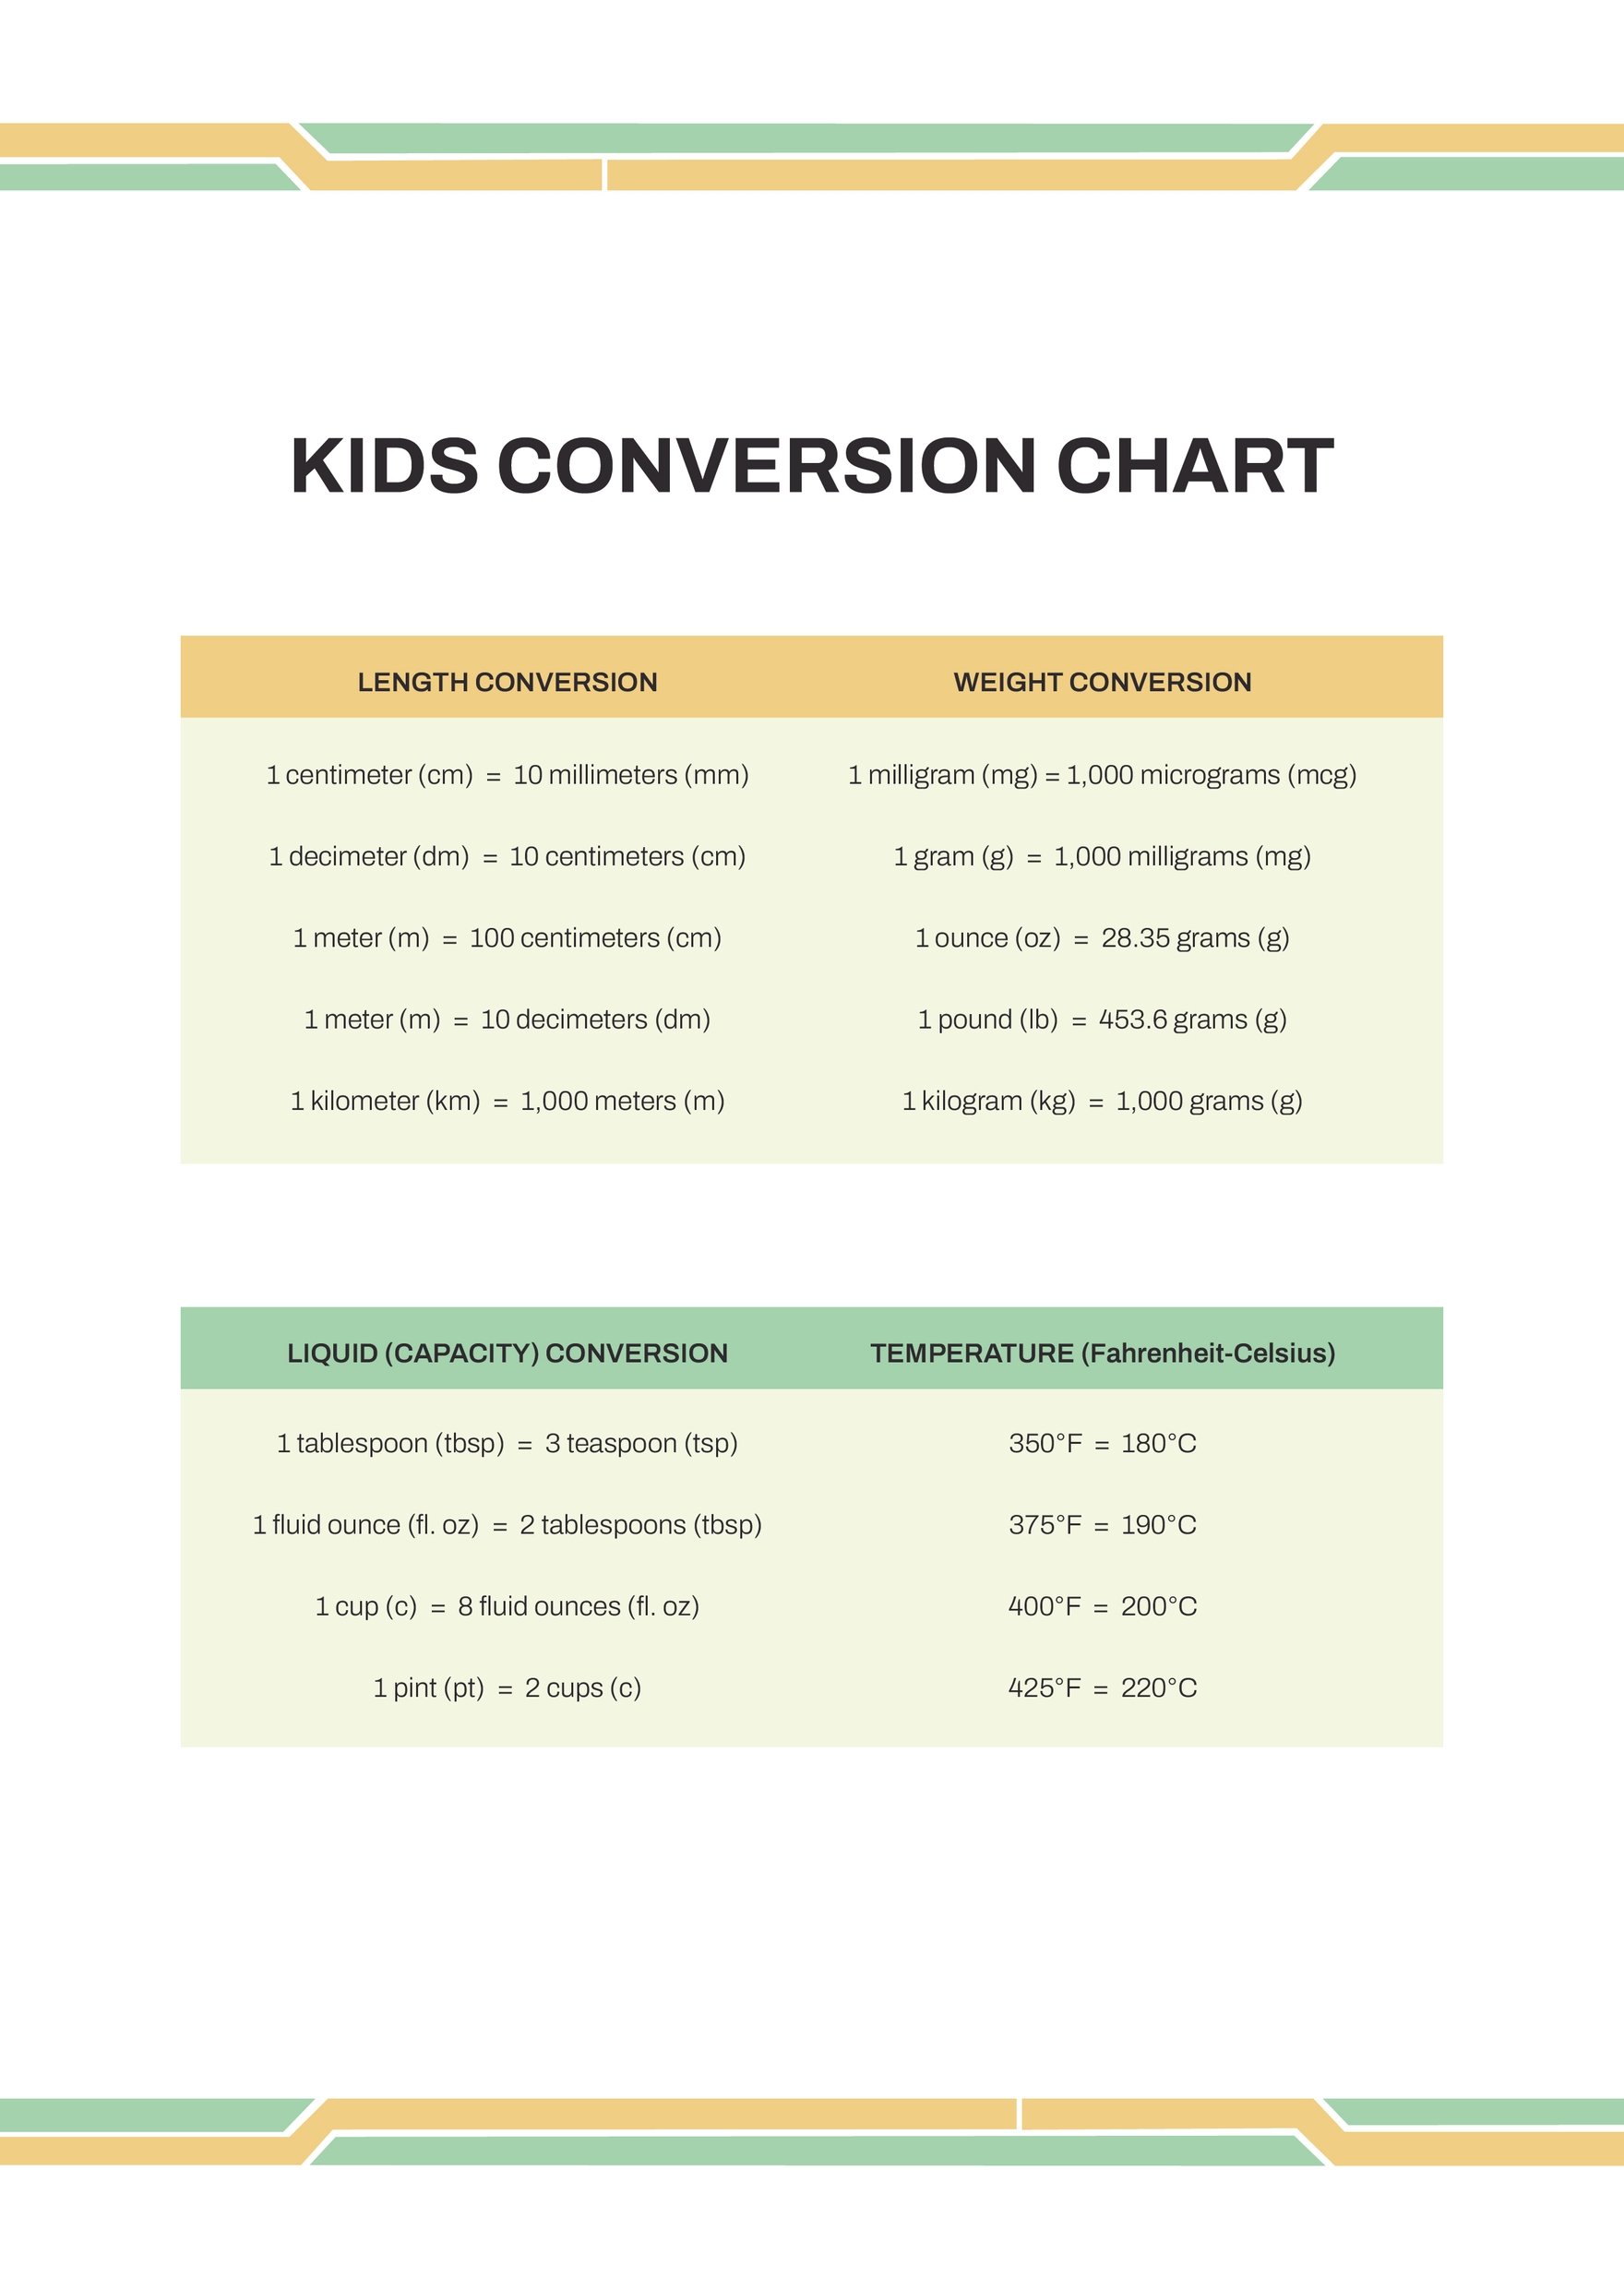 Kids Conversion Chart in PDF